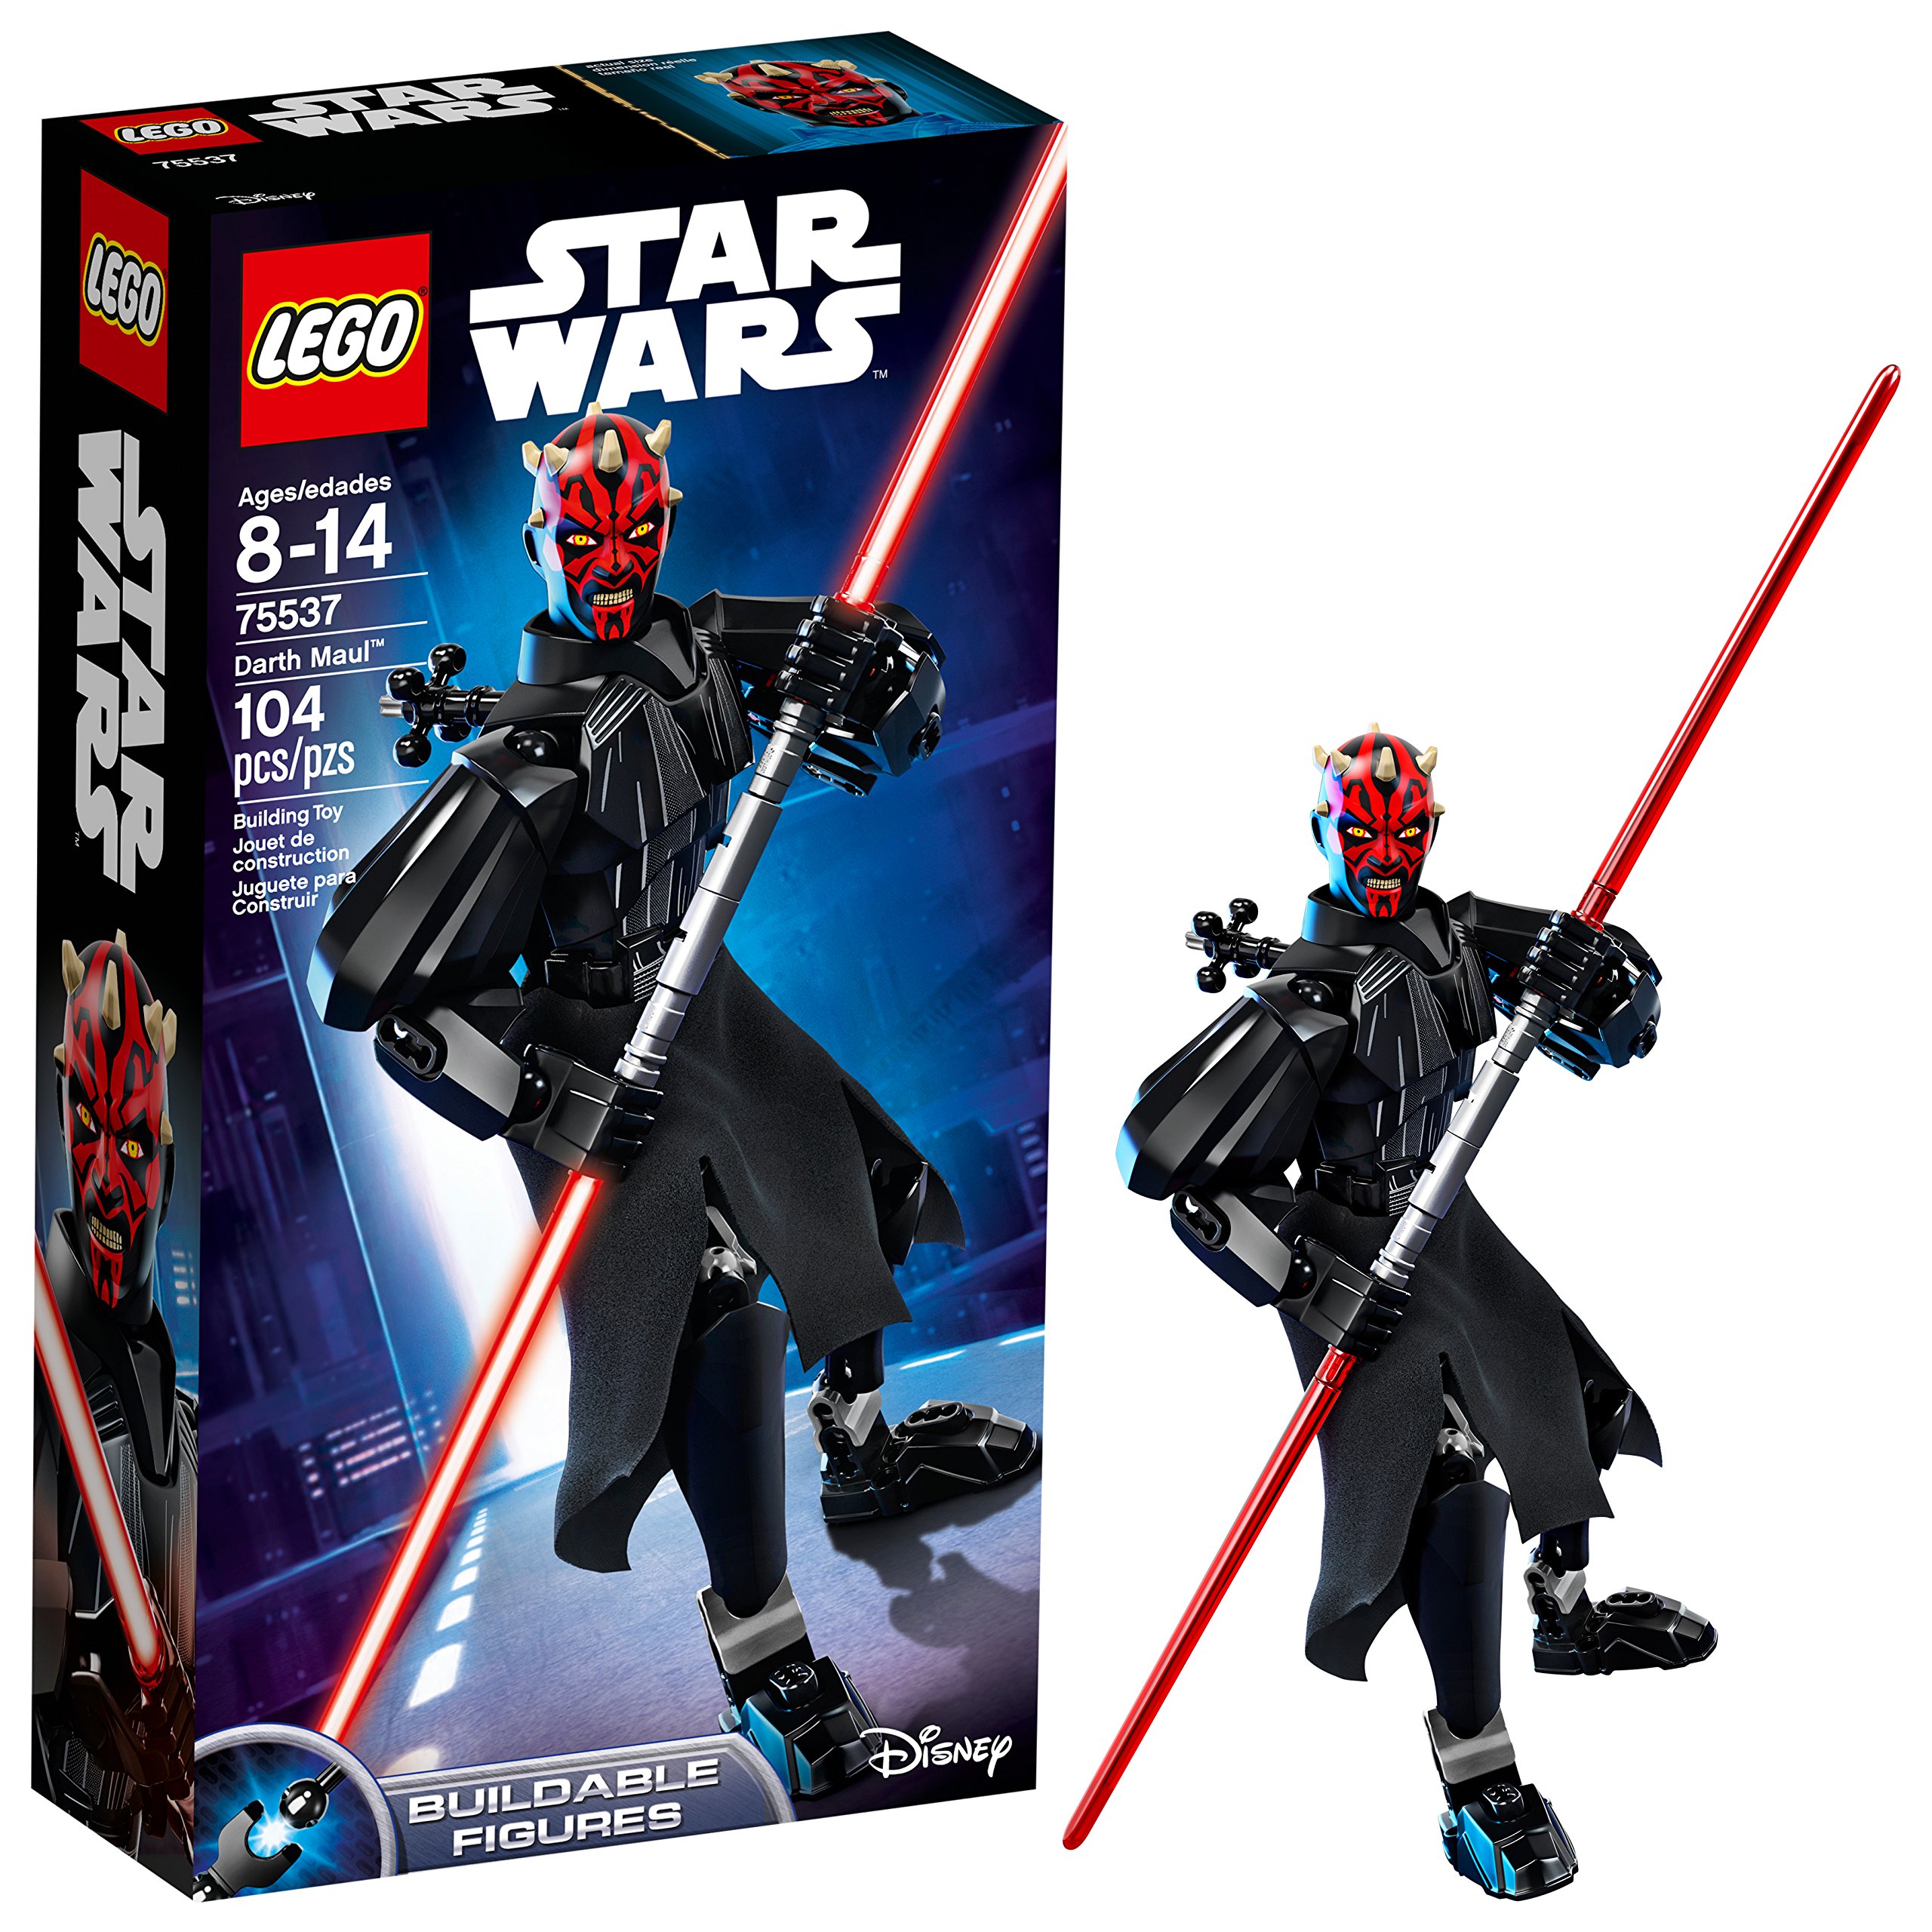 LEGO Star Wars Darth Maul 75537 Building Kit (104 Piece)